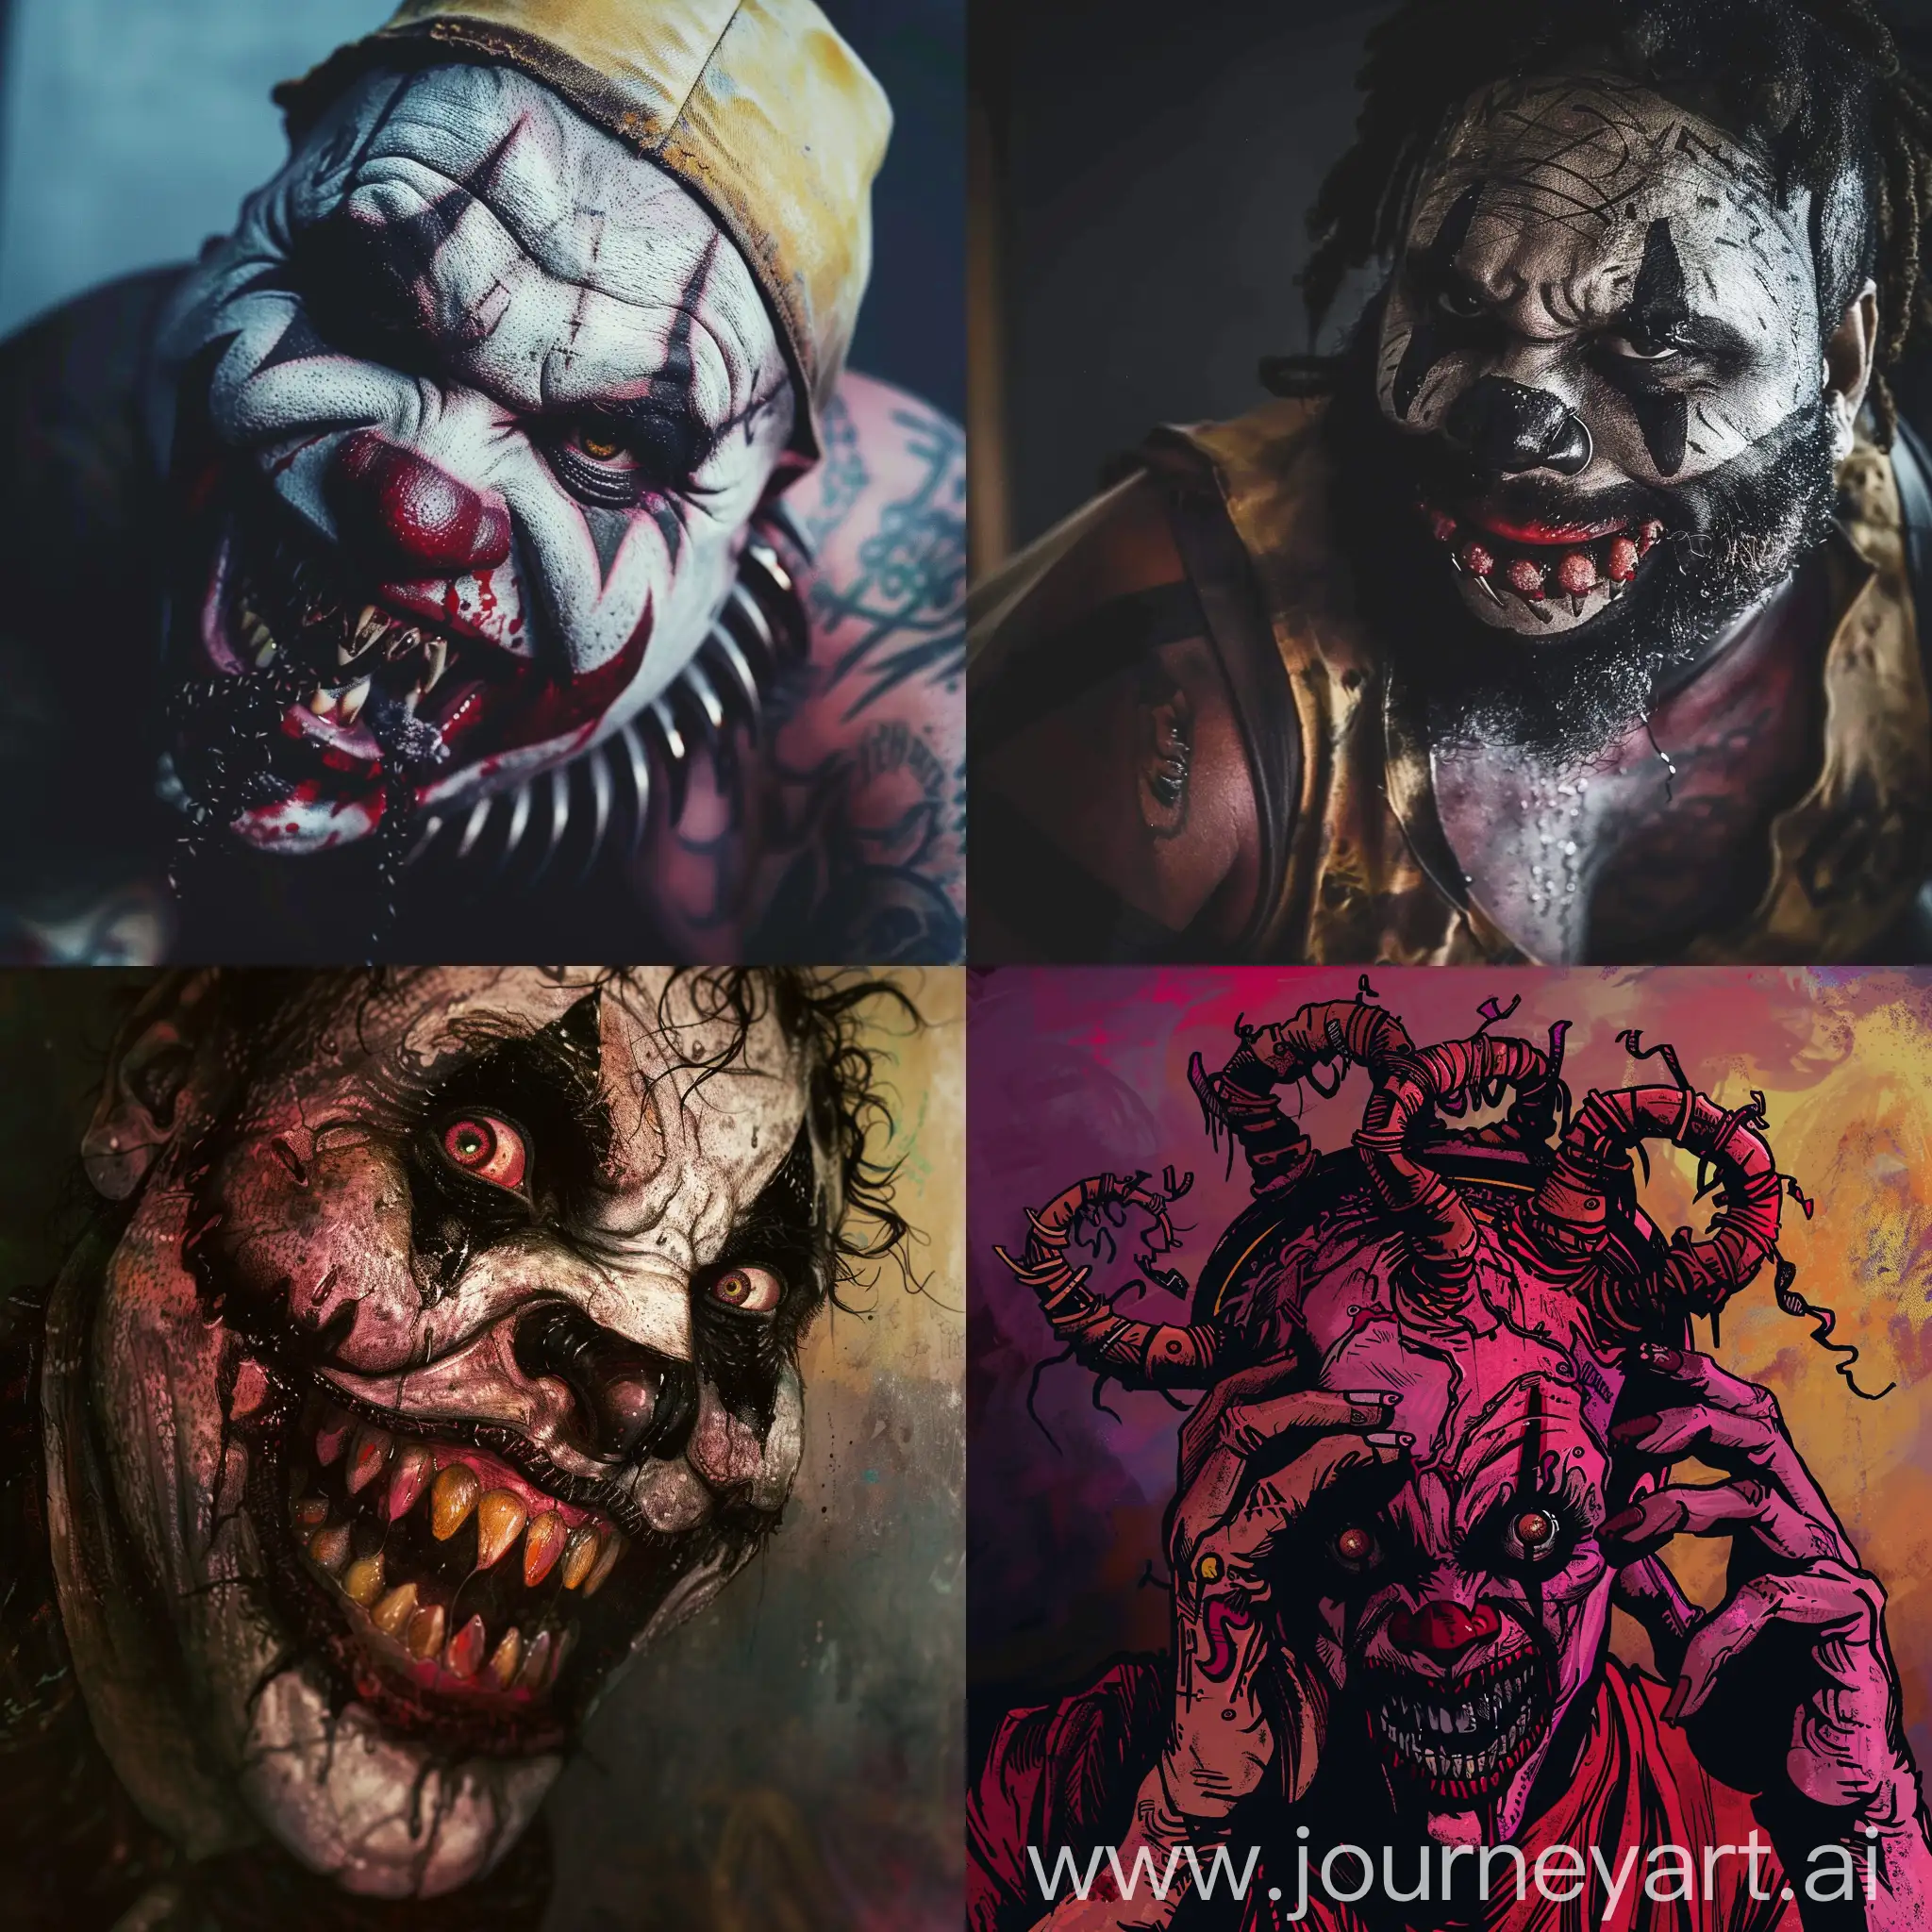 Menacing-Juggalo-Portrait-Dark-Clown-Evoking-Fear-and-Psychosis